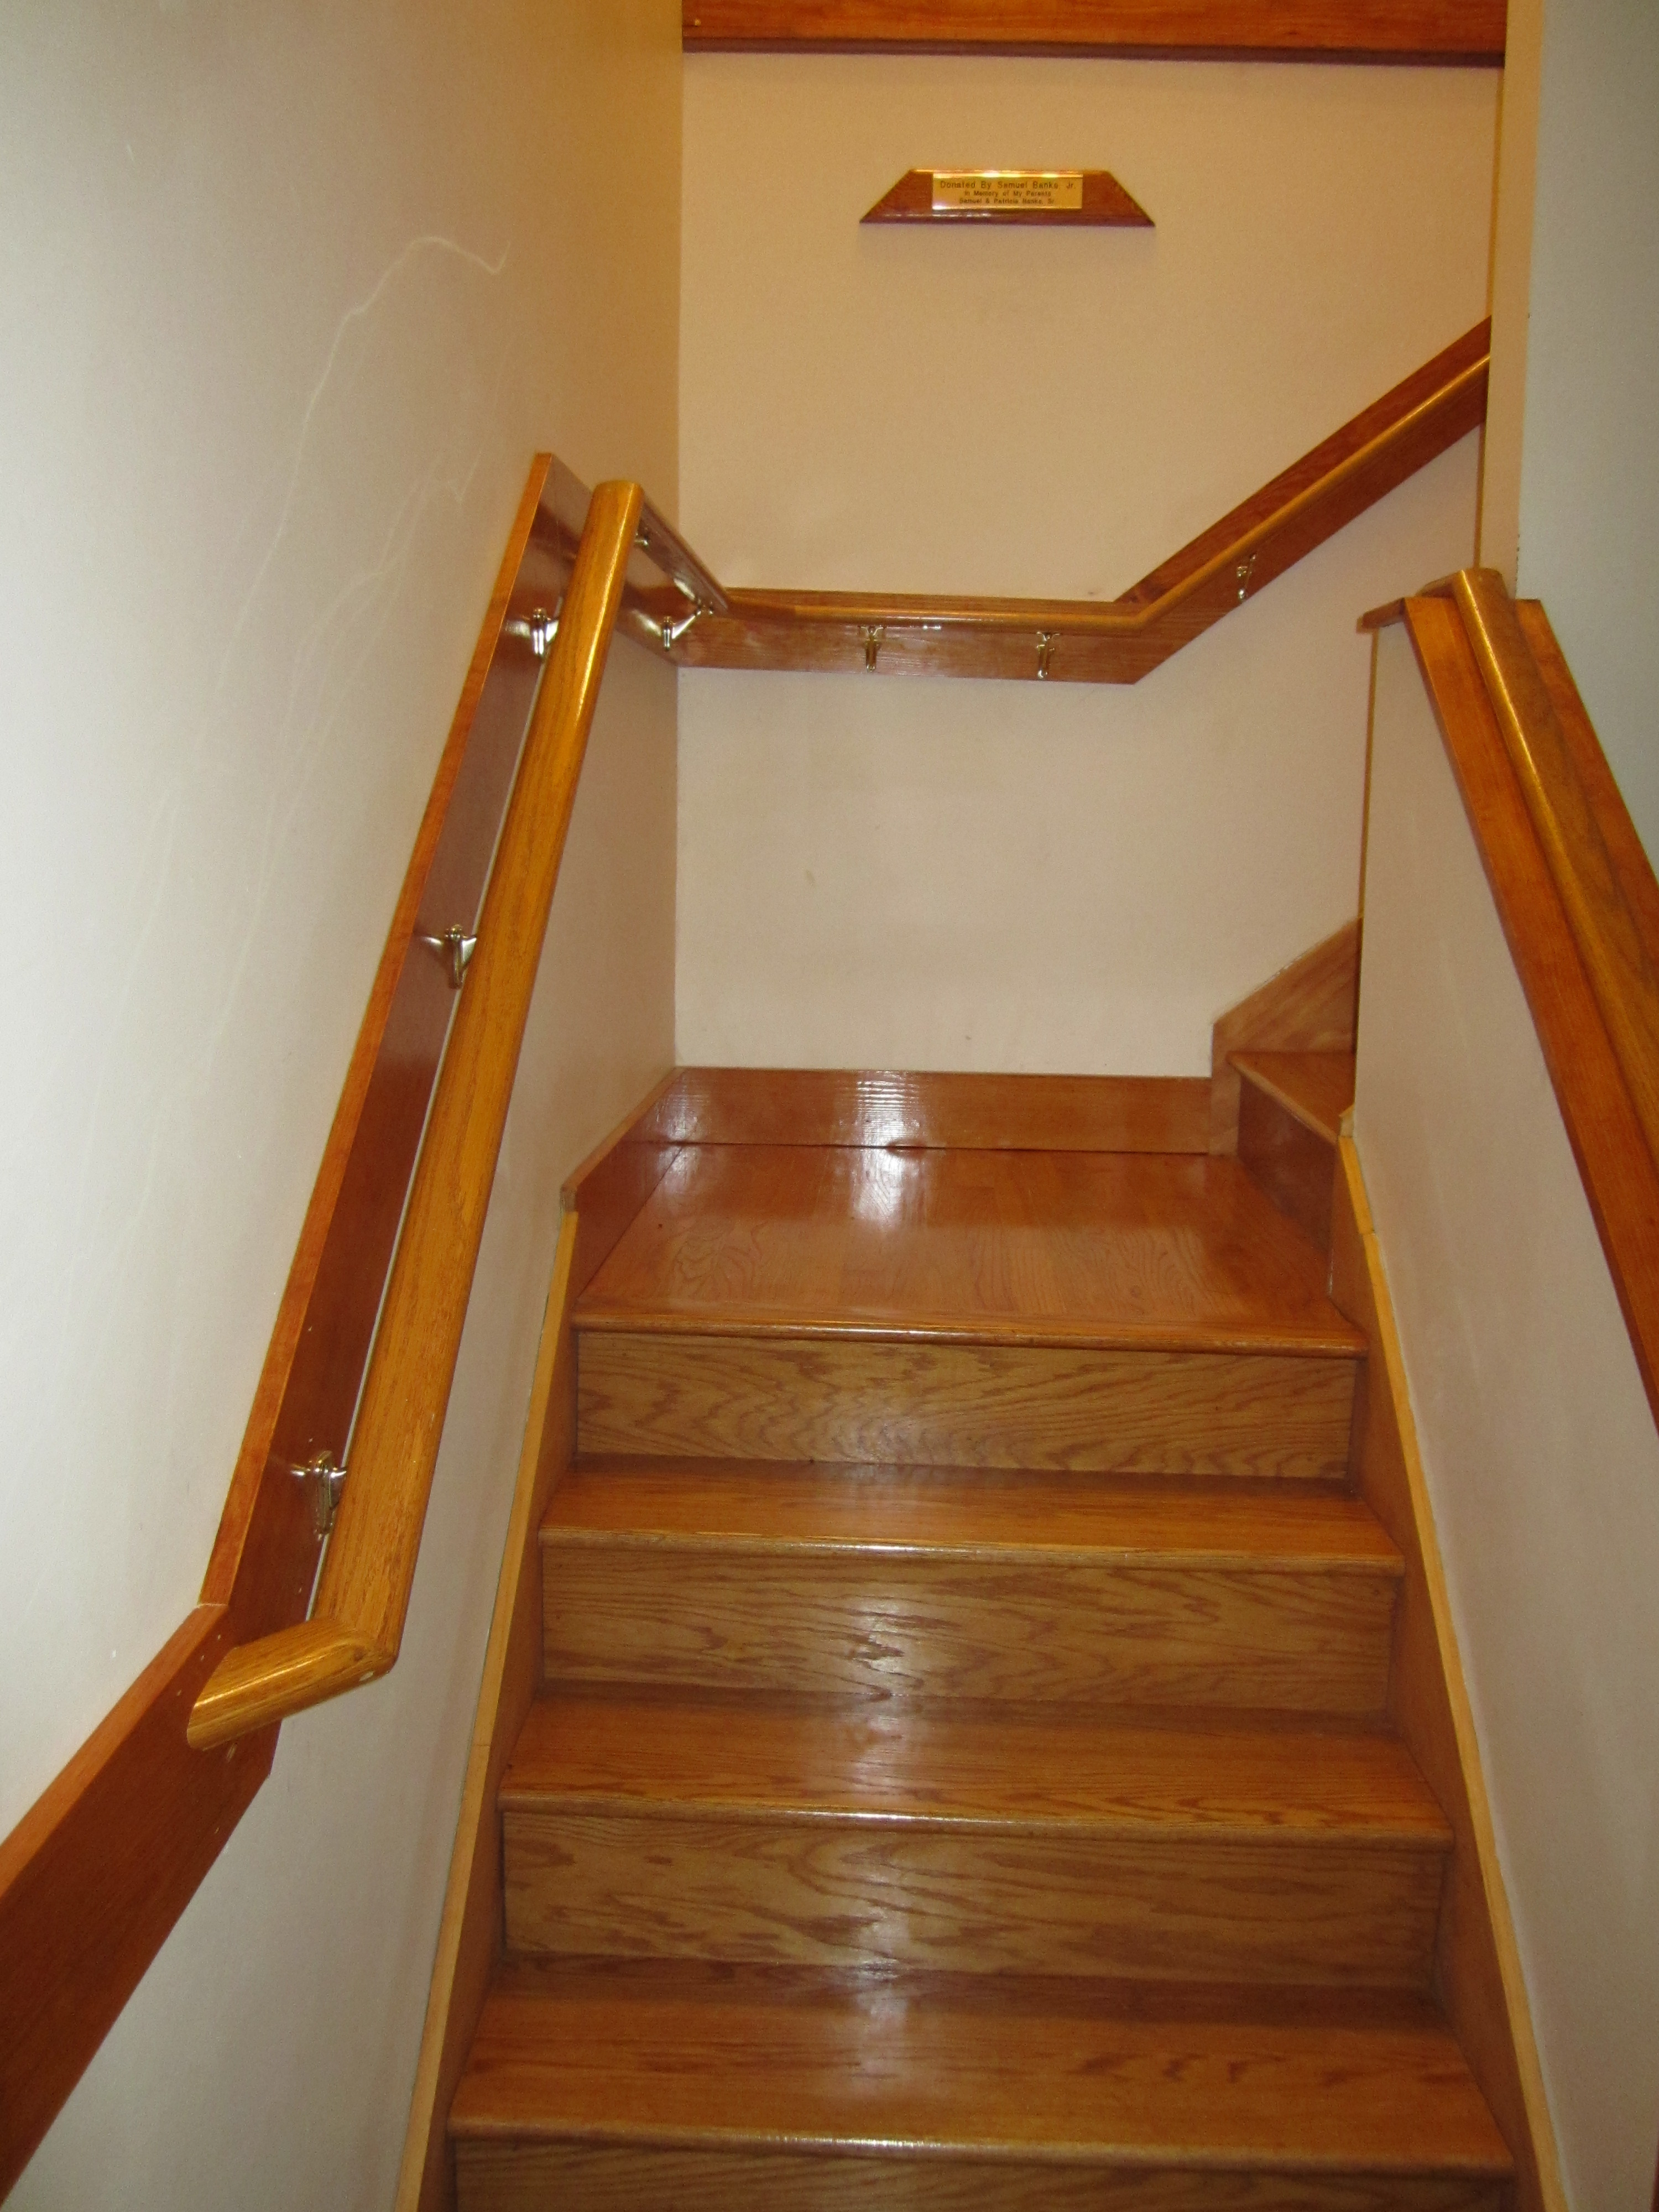 Stairway to 2nd floor